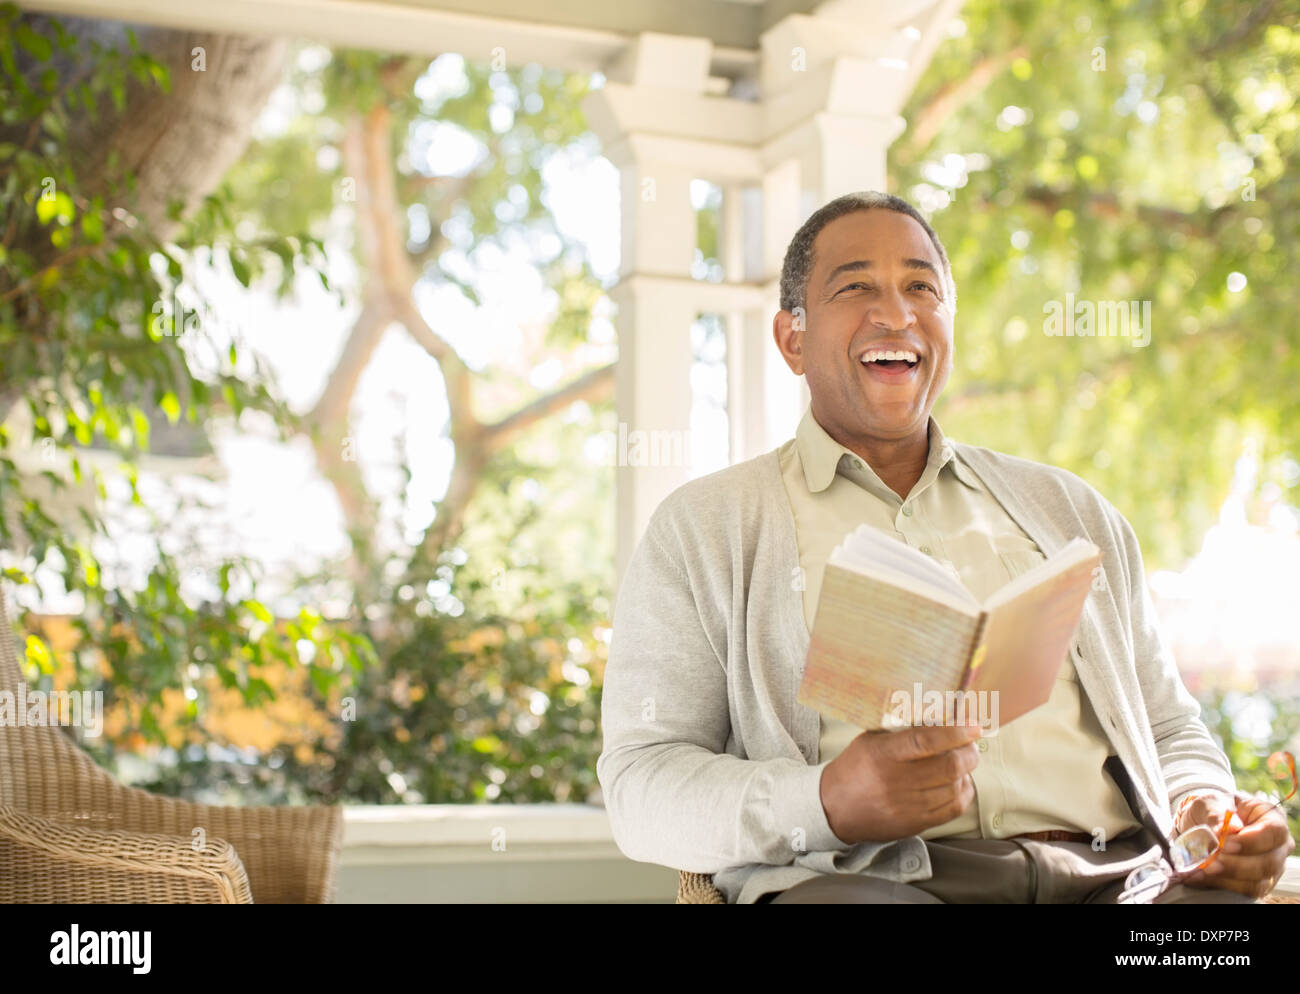 Laughing senior man reading book on porch Stock Photo